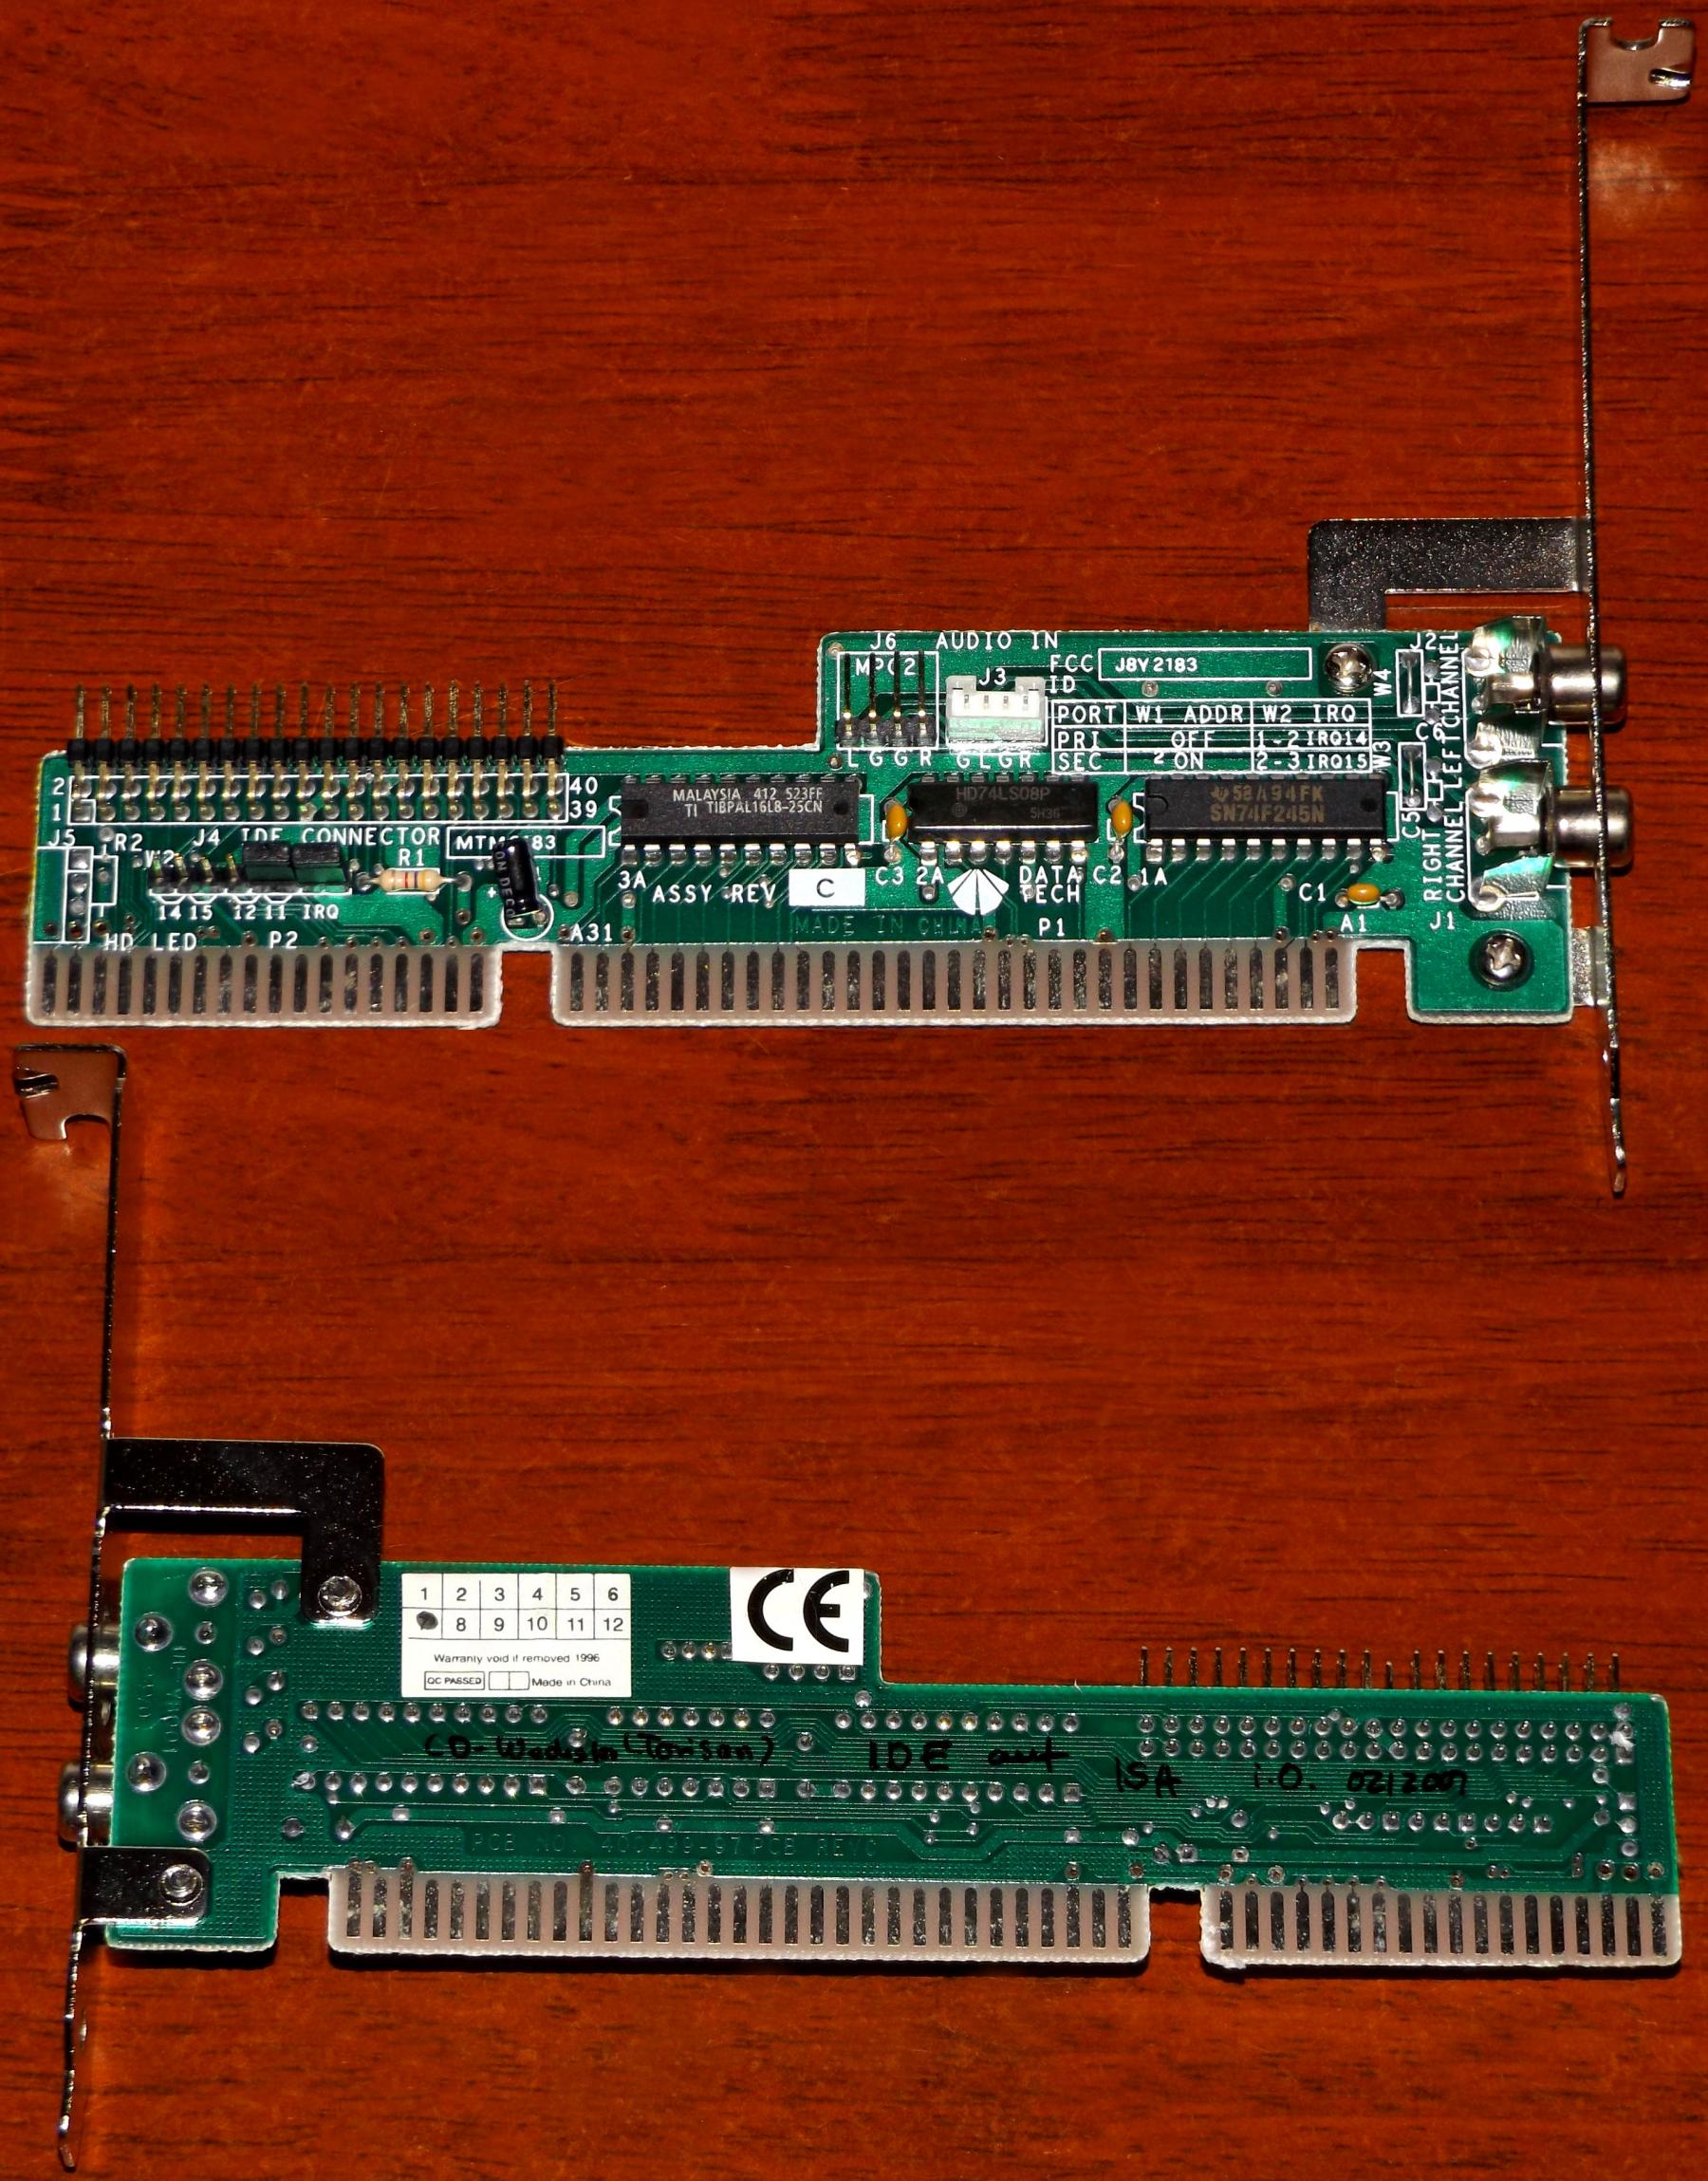 Data-Tech-IDE-Connector-Audio-BNC-Torisan-CD-Wechsler-PCB-No-400499-97-Rev-C-FCC-J8Y2183-ISA-1996.jpg